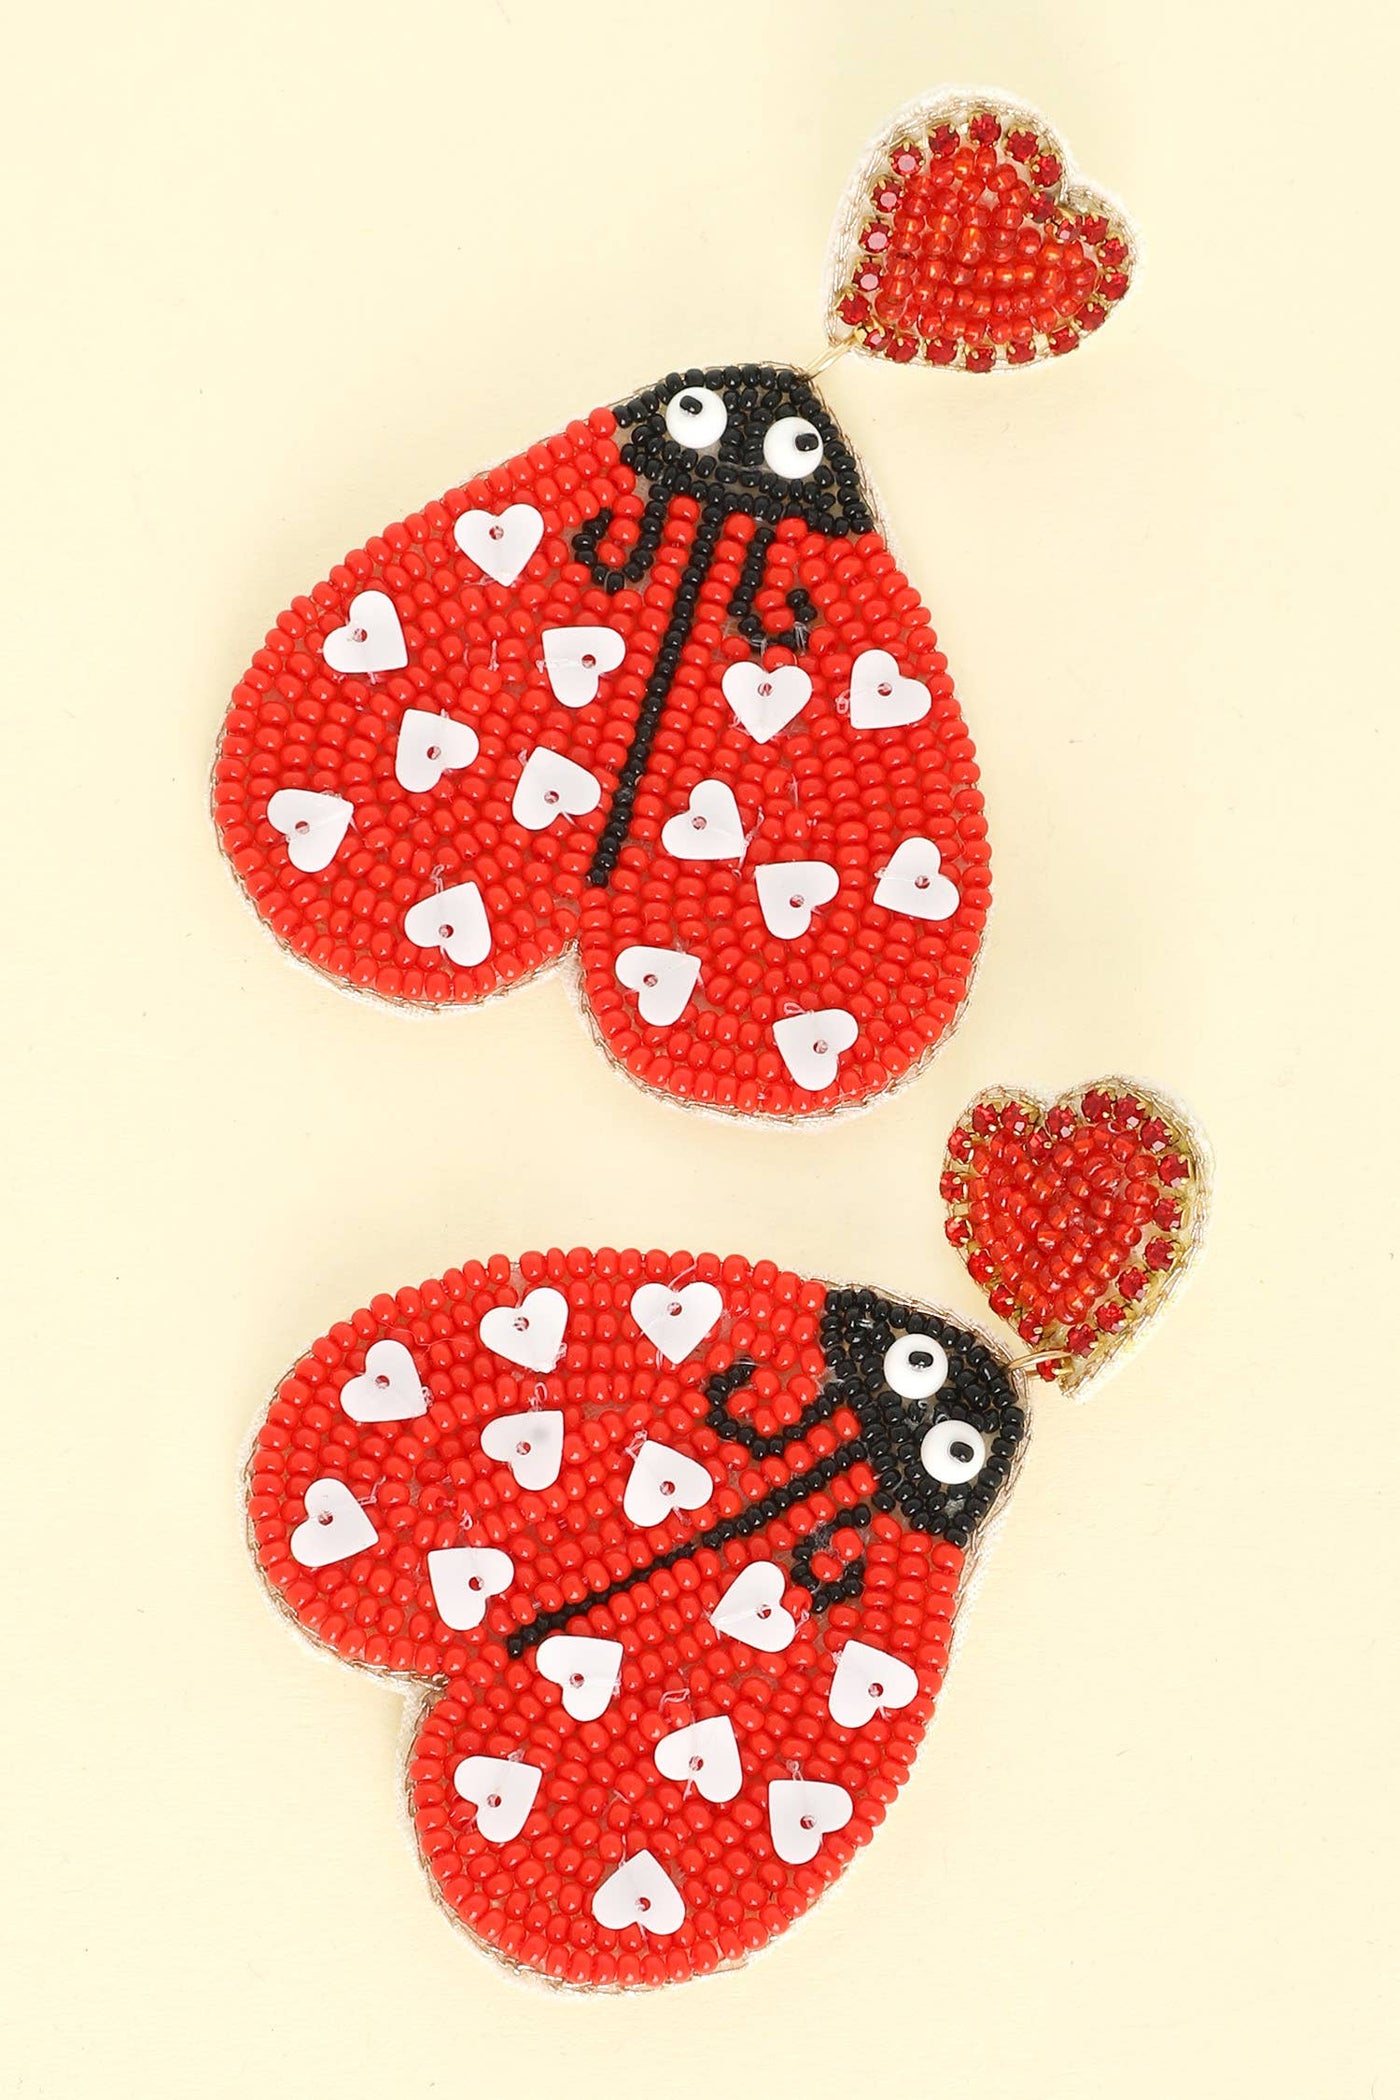 Love Bug Jeweled Earrings